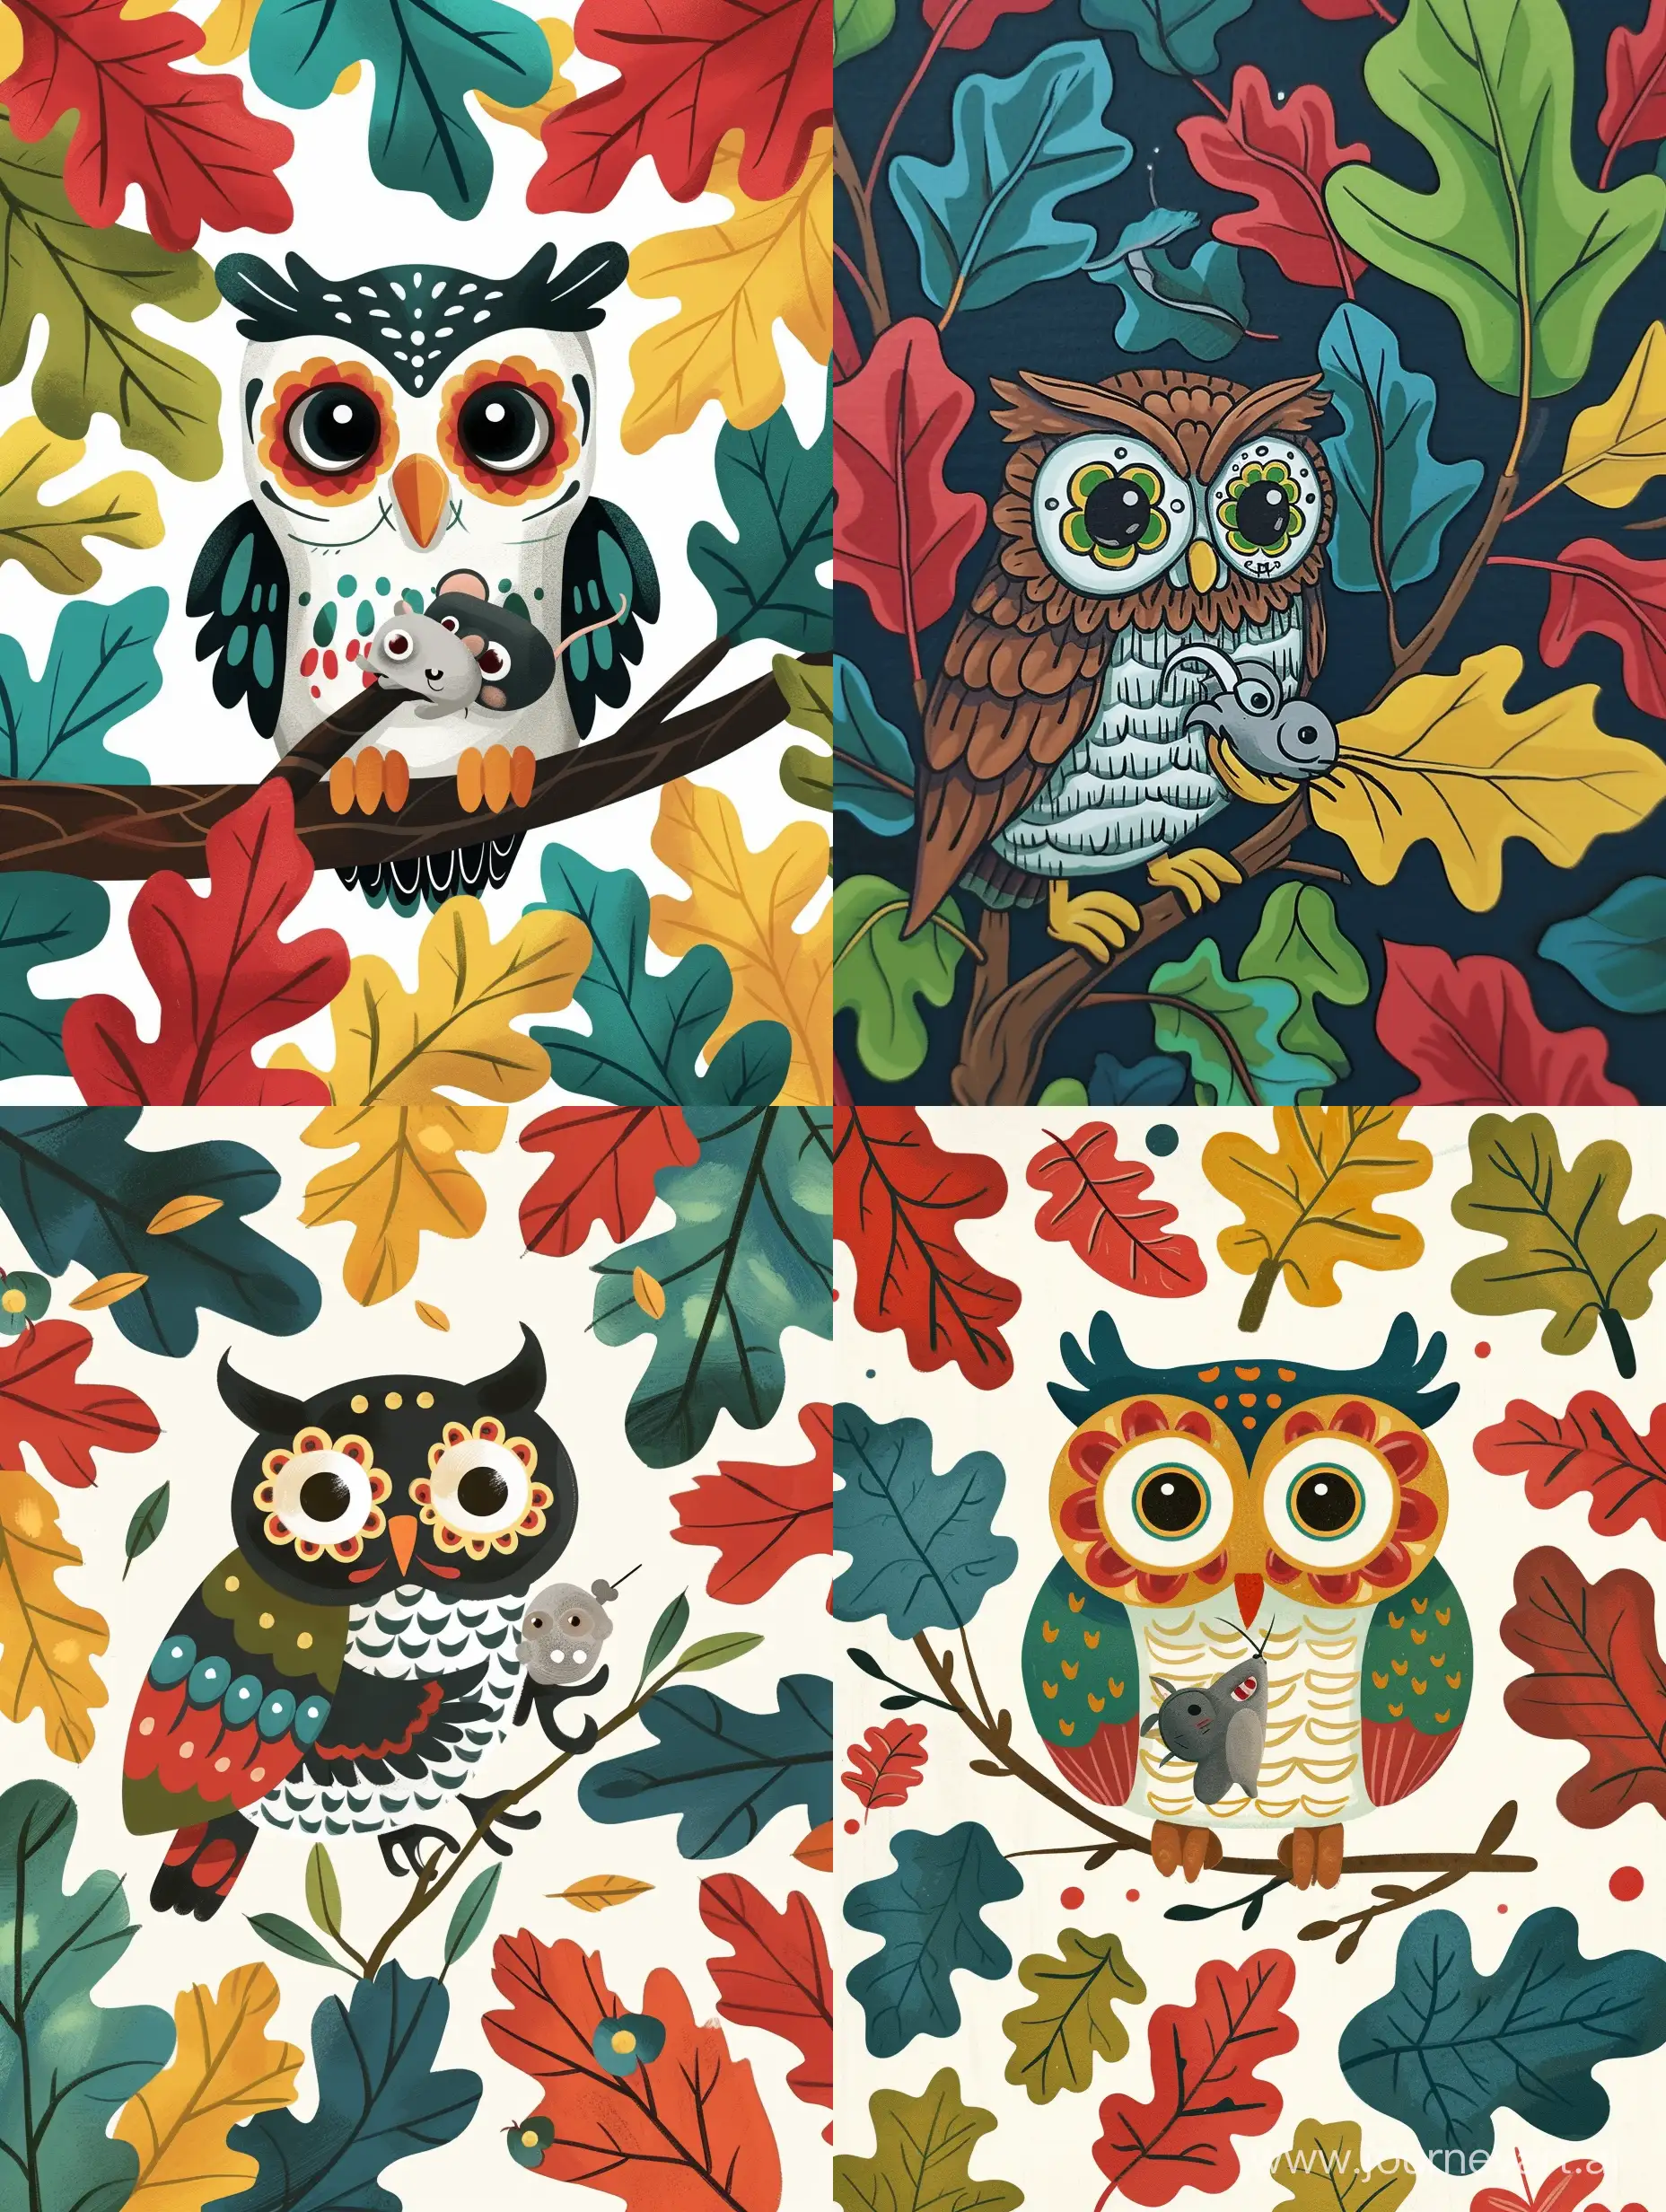 Adorable-Little-Owl-Celebrating-Dia-de-los-Muertos-with-a-Kawaii-Twist